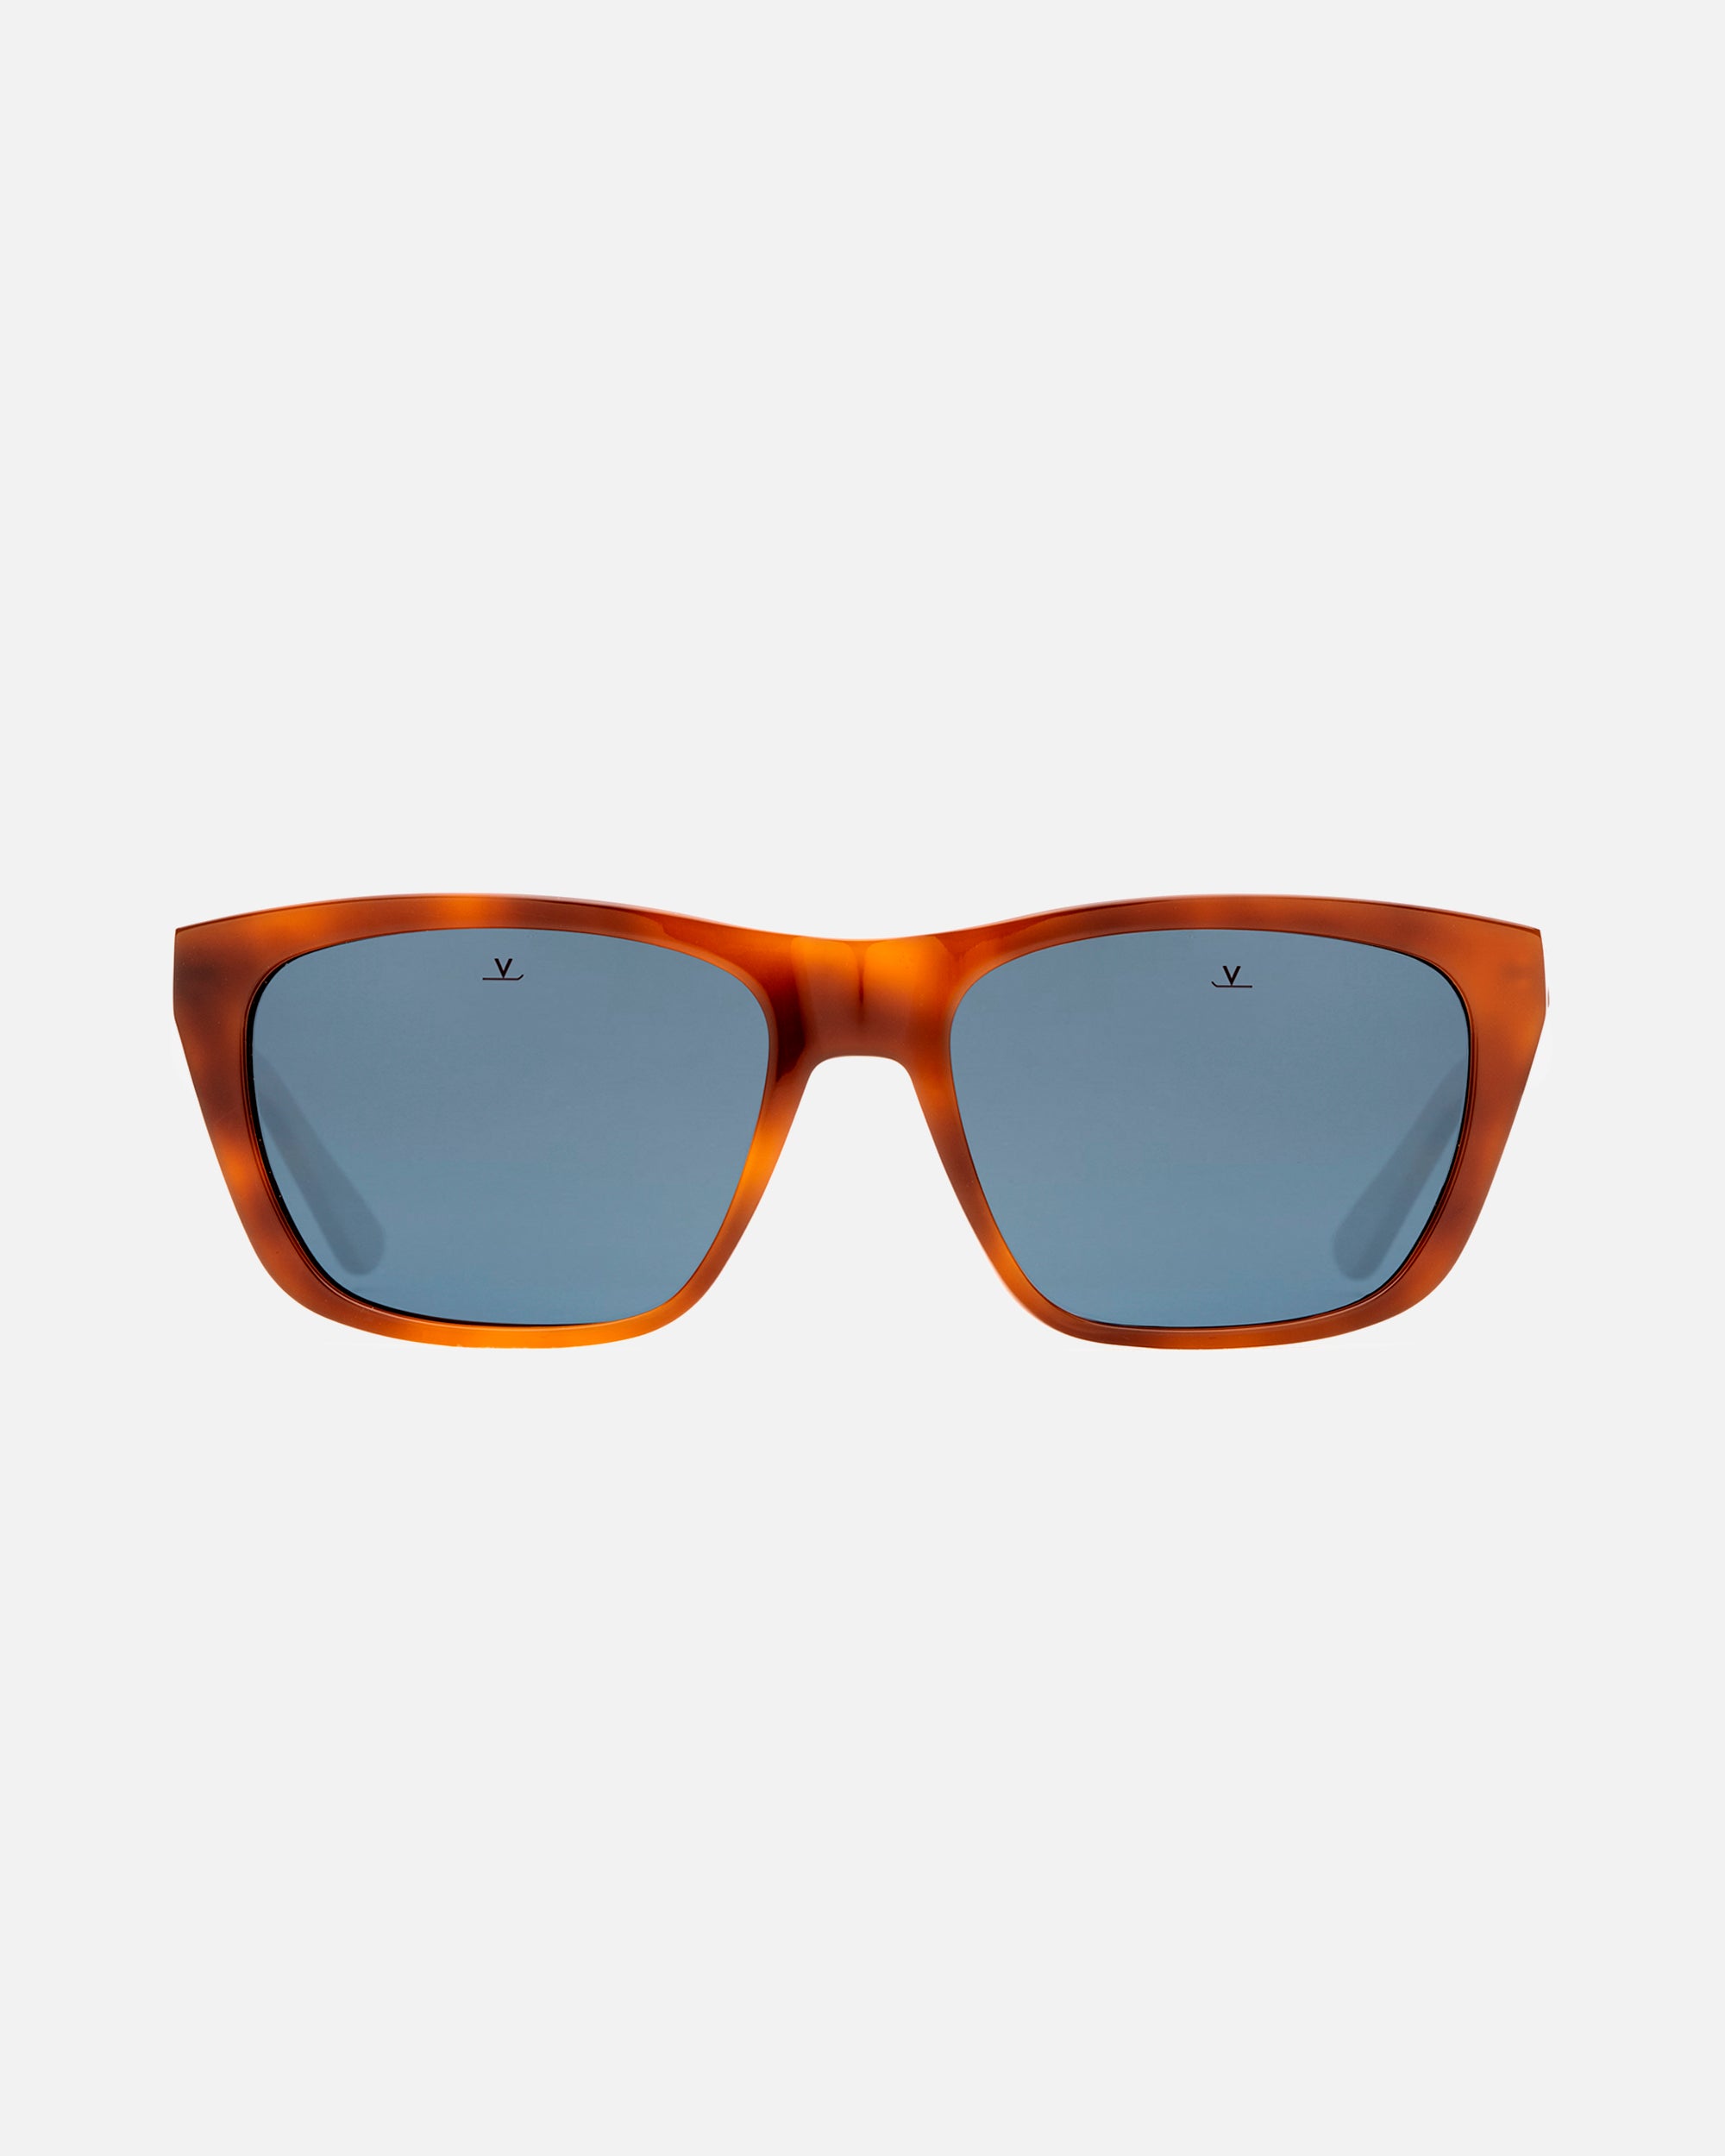 Vuarnet LEGEND 03 VALLEY Tortoise - Lifestyle Sunglasses